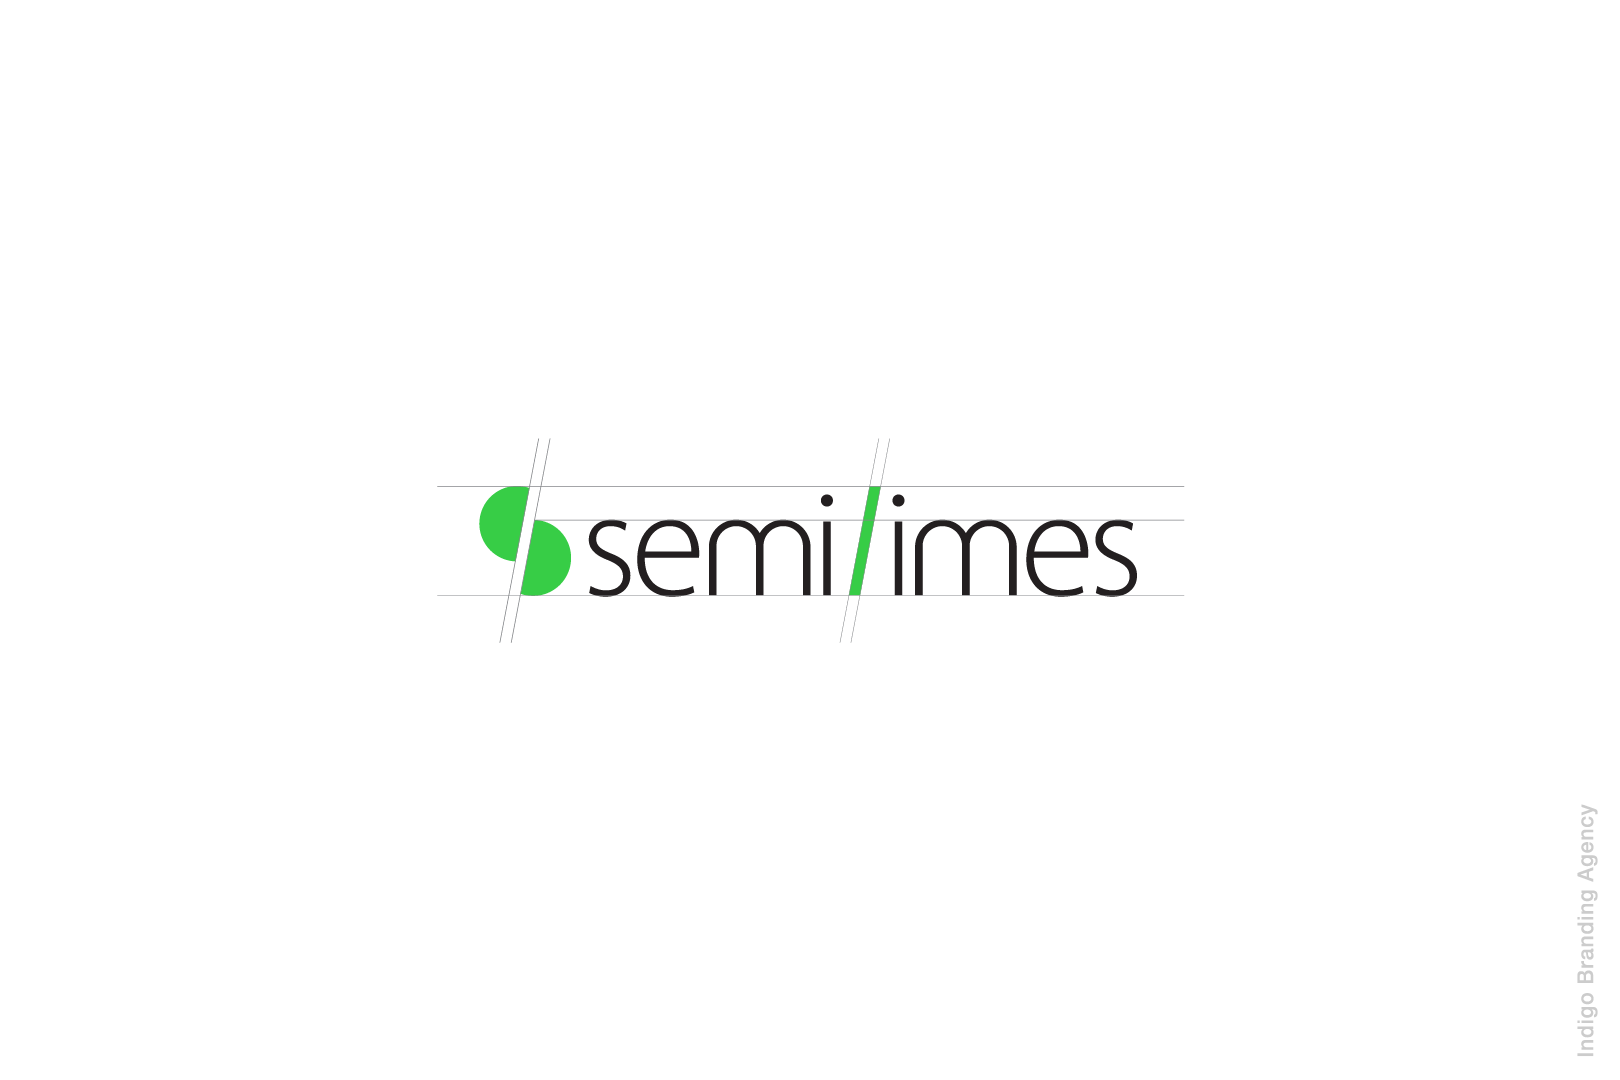 Semilimes branding and logo design by Indigo branding